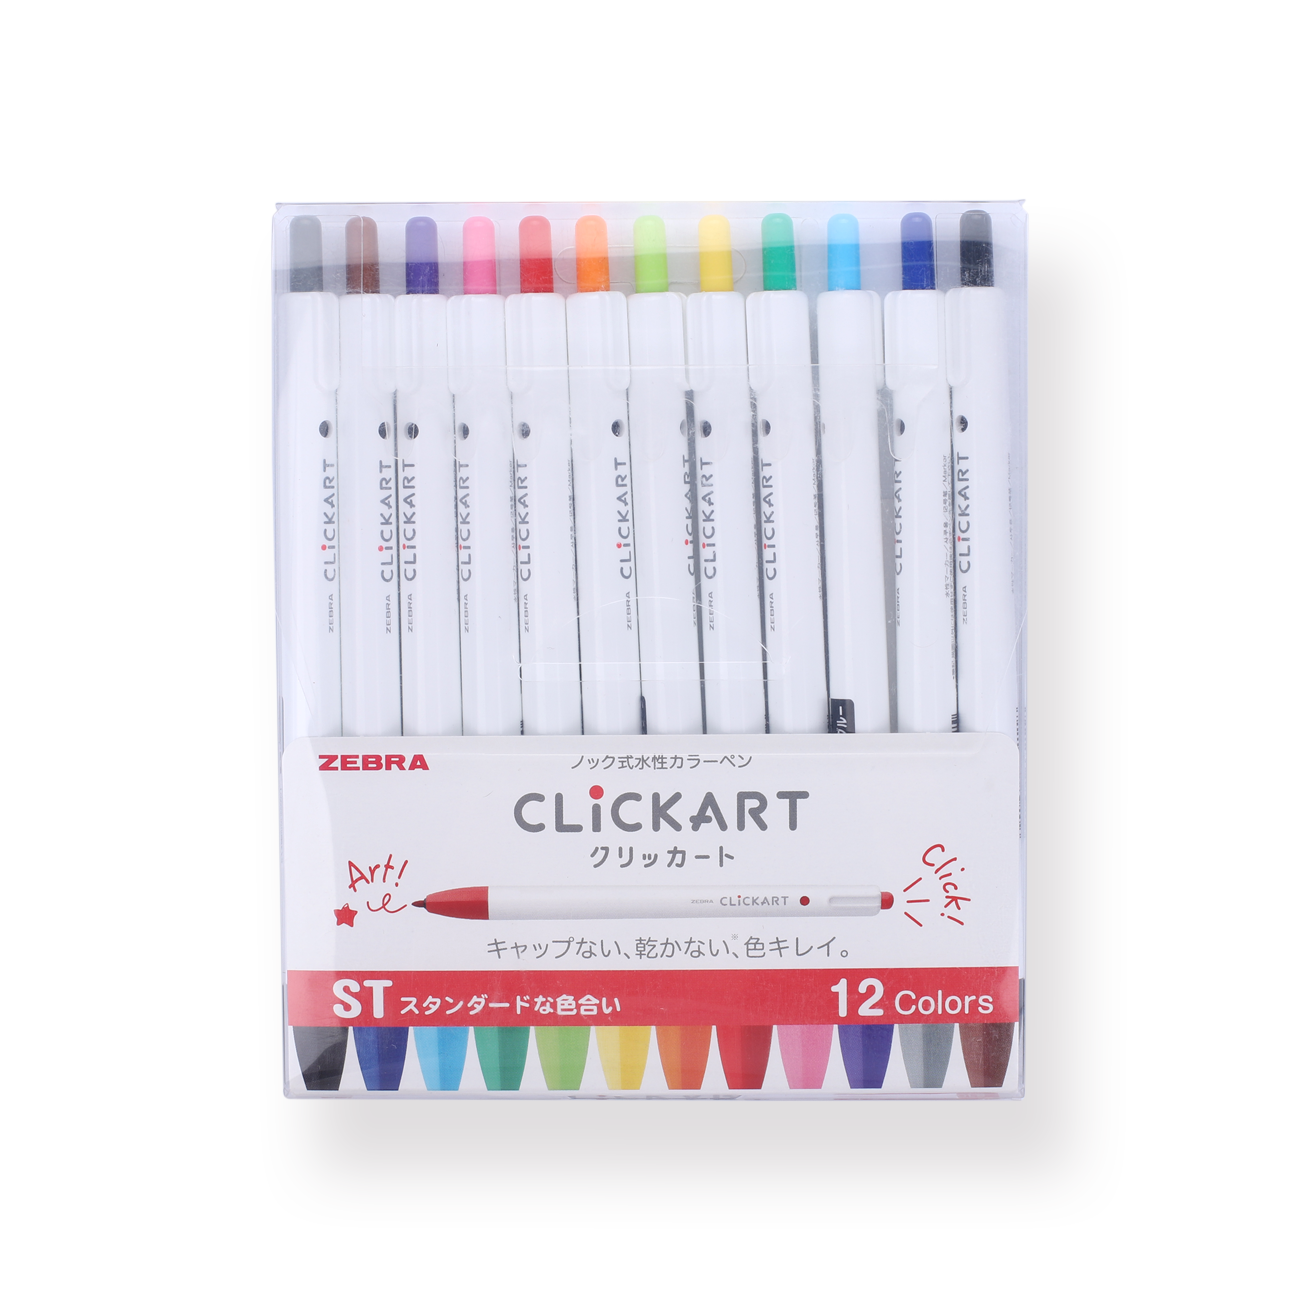 ClickArt Retractable Marker Pen 0.6mm Light Brown - The Art Store